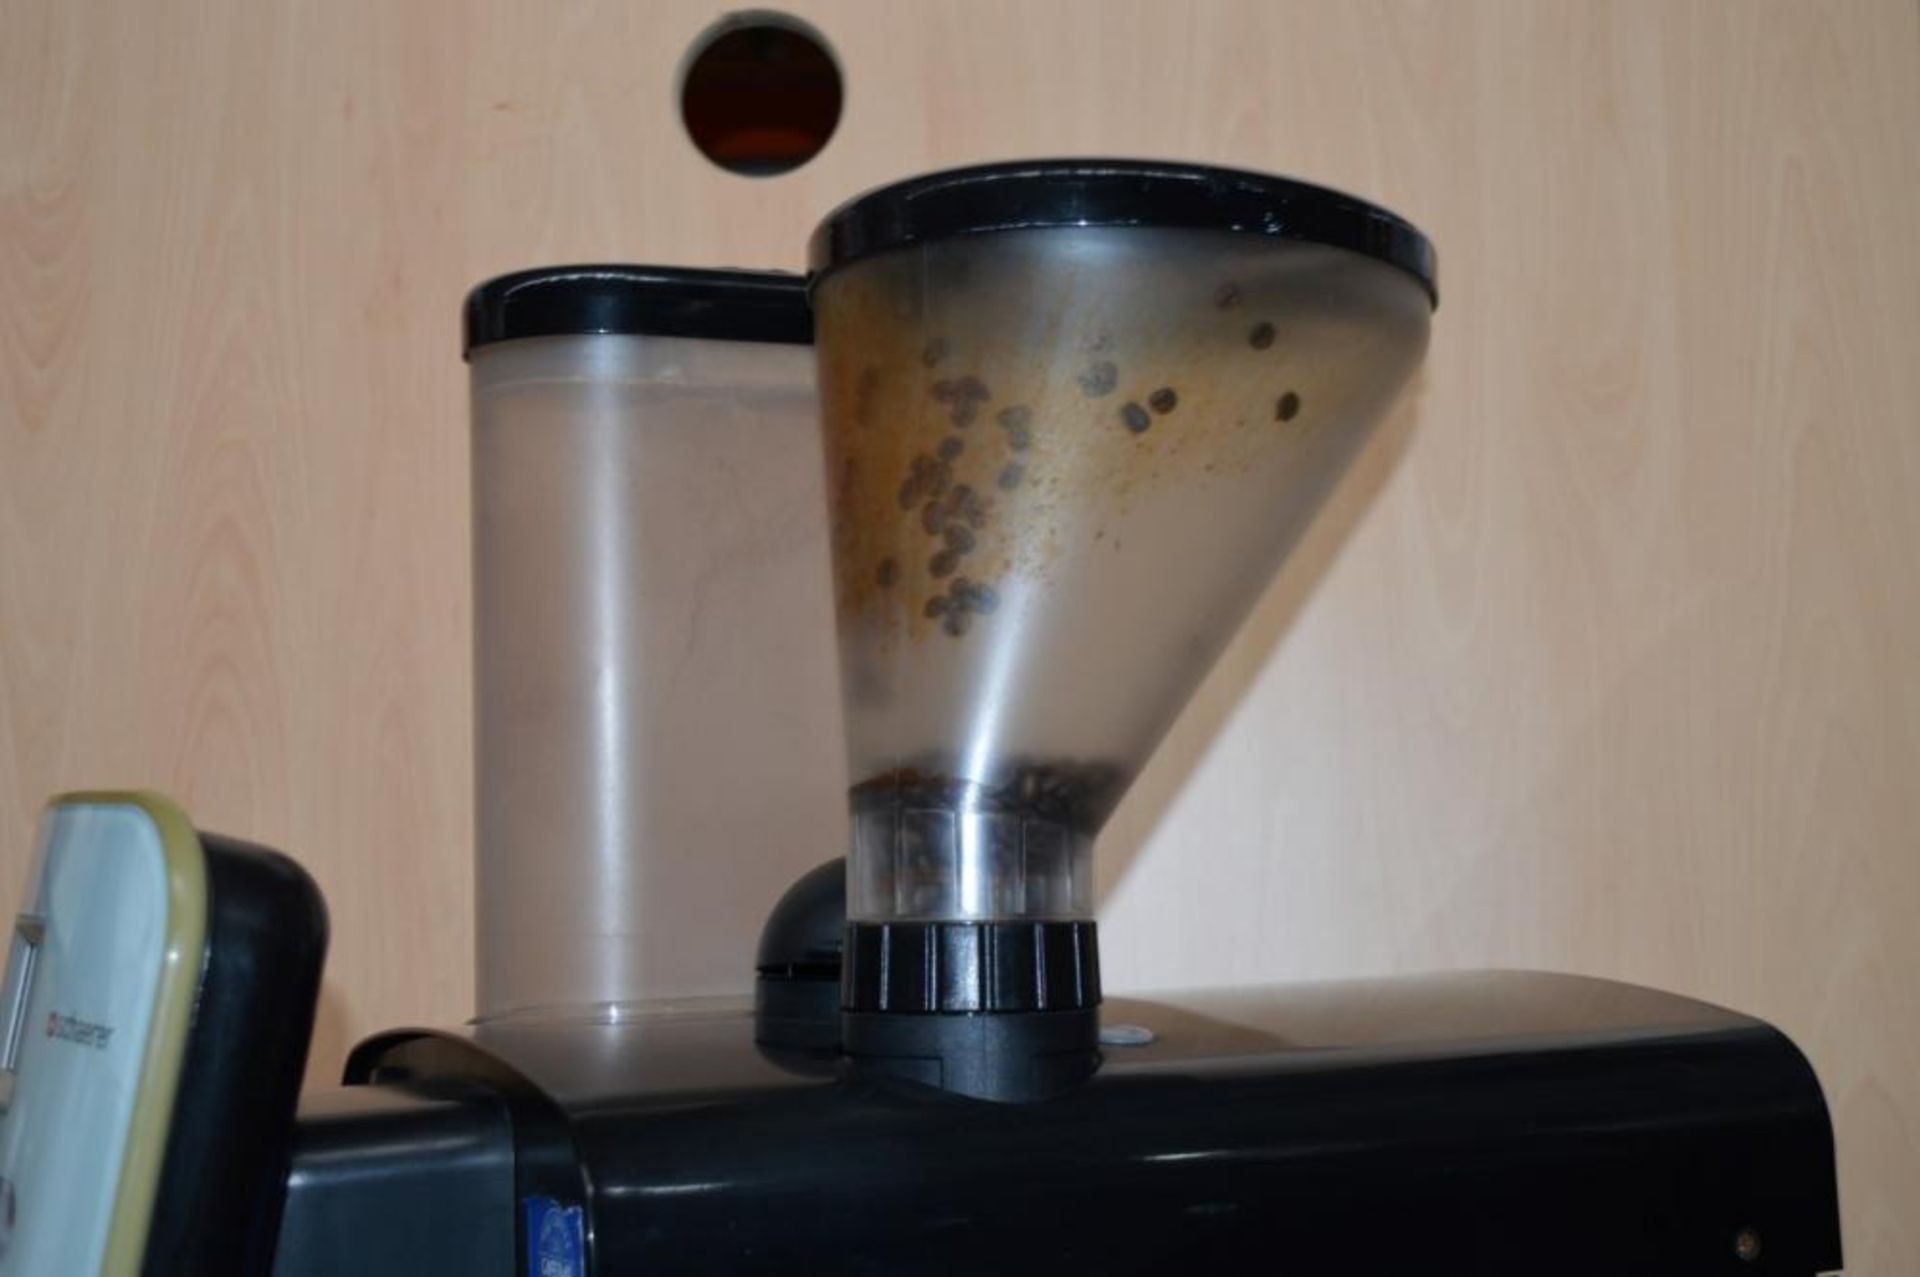 1 x Schaerer Vito Coffee Espresso Hot Chocolate Bean To Cup Hot Drinks Machine - Includes Vitrifrigo - Image 6 of 12